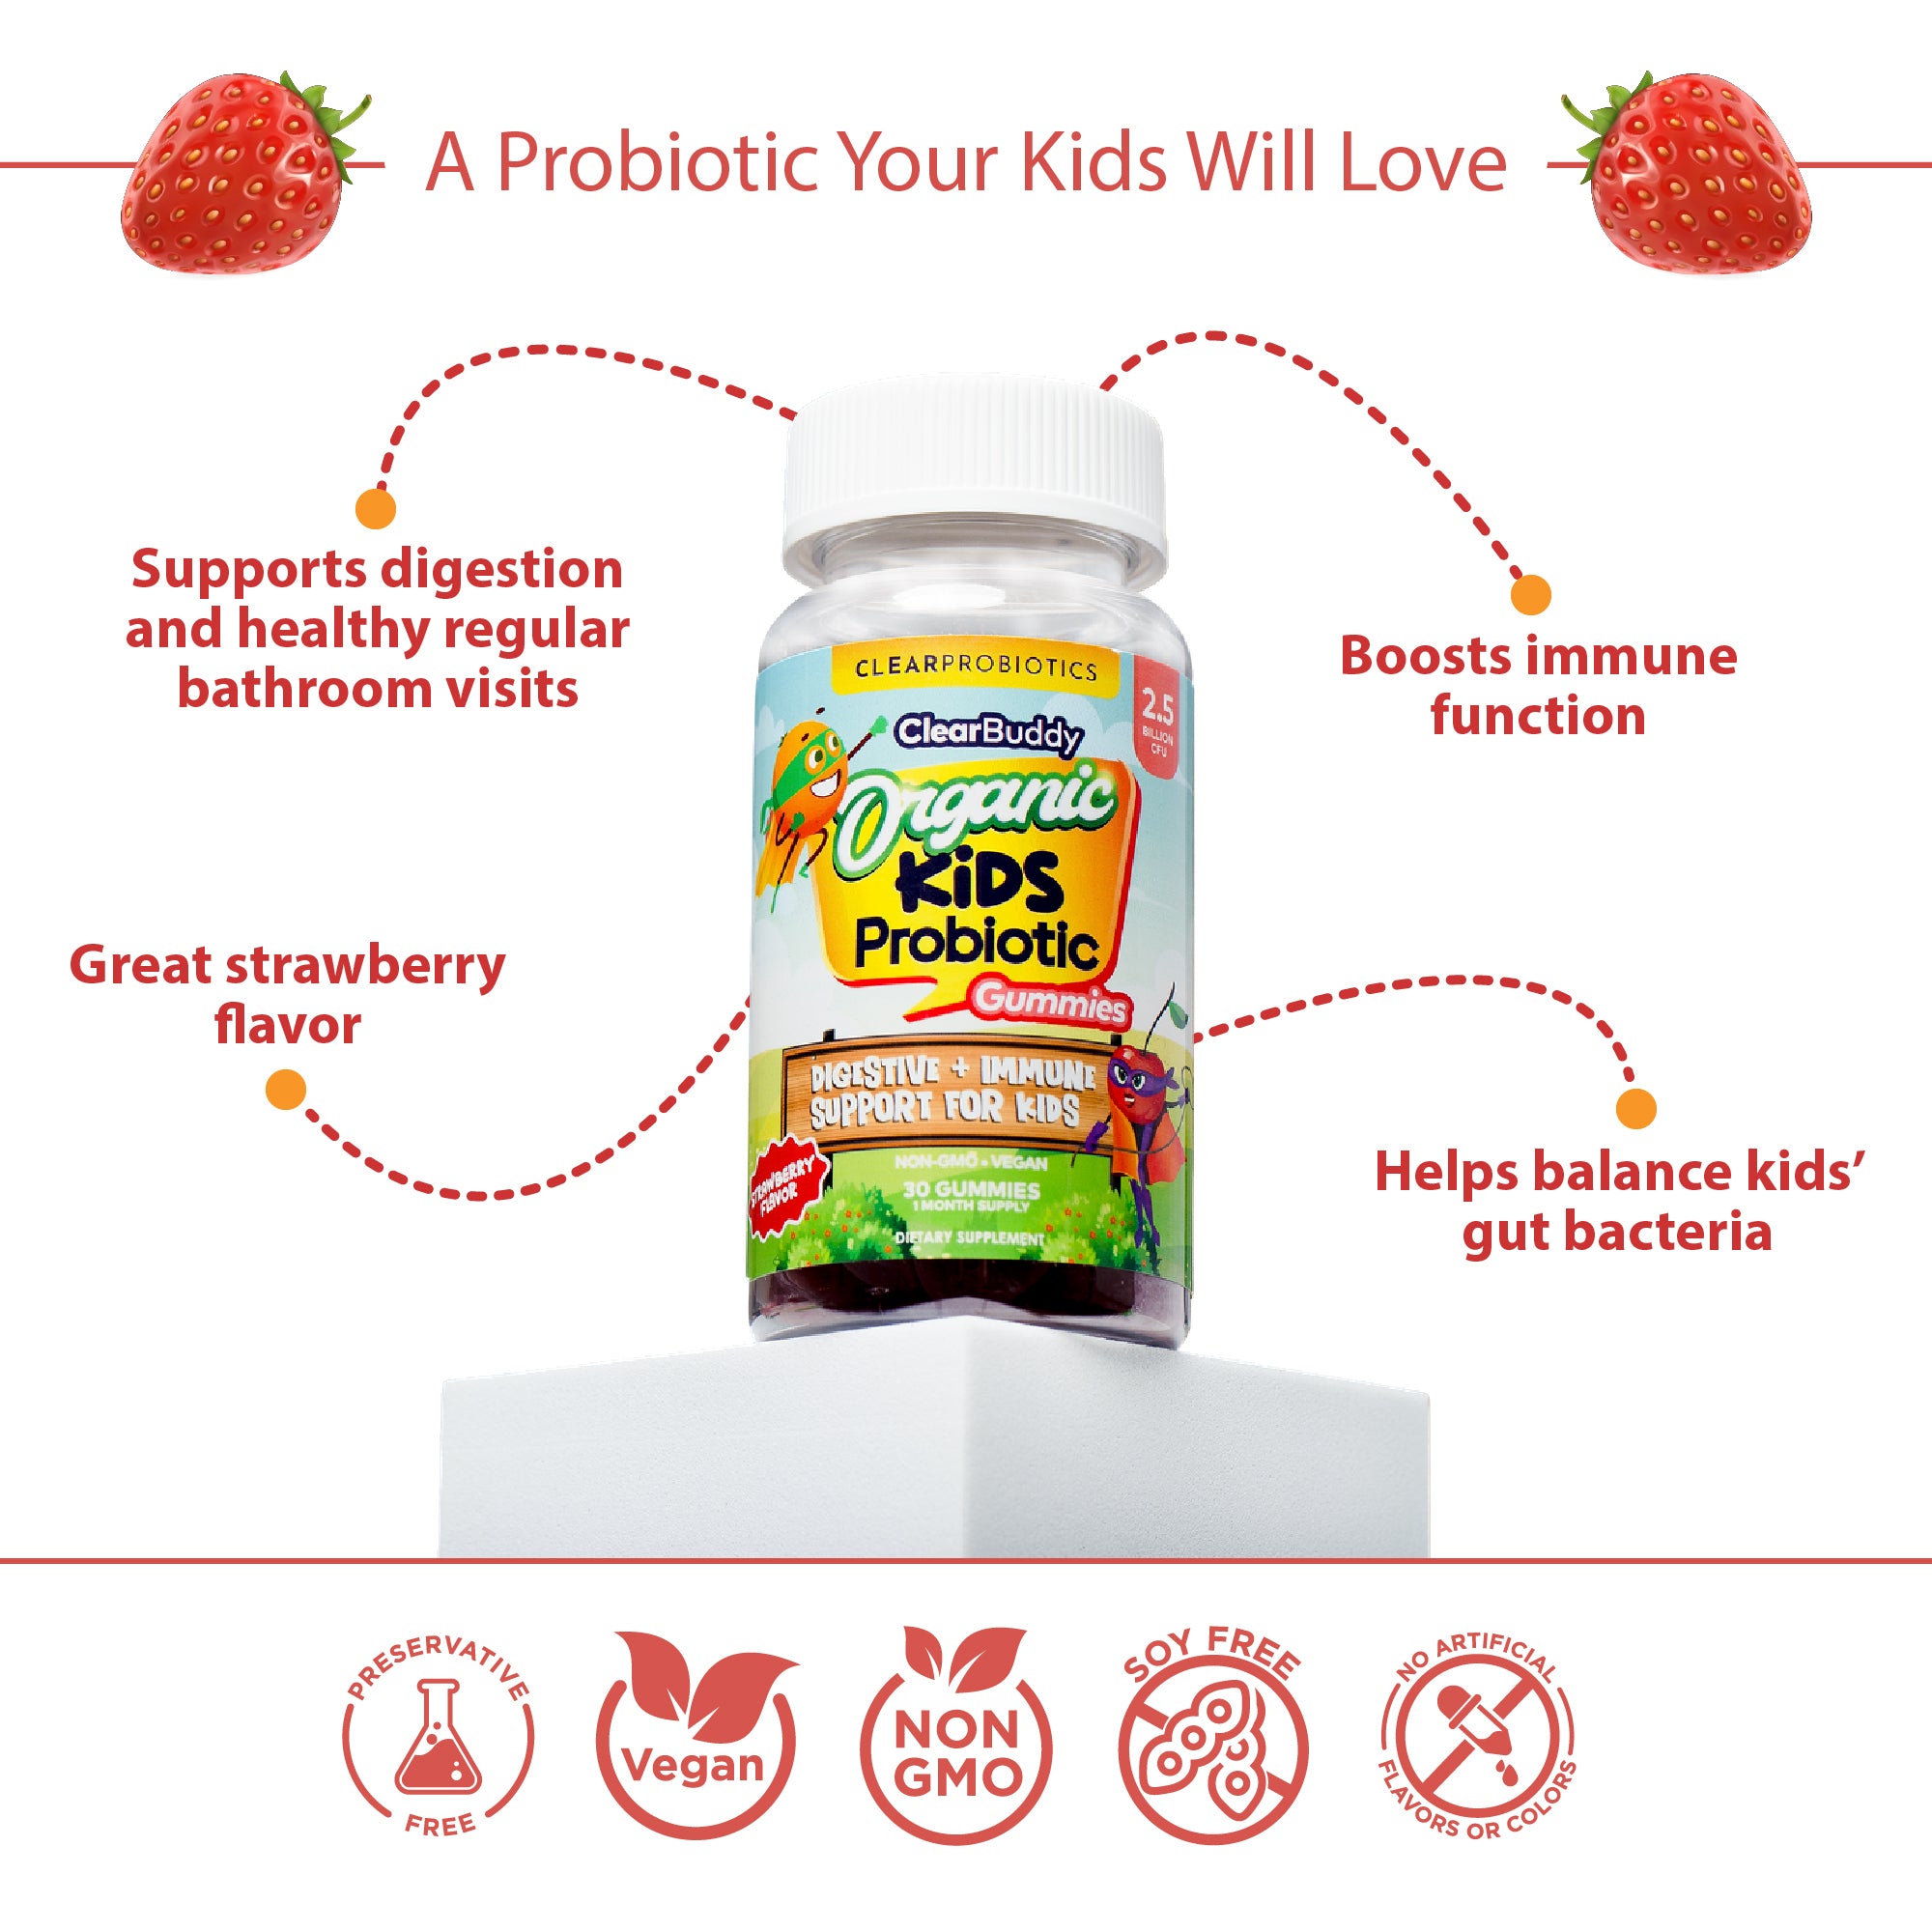 Clear Buddy Organic Kids Probiotic Gummies